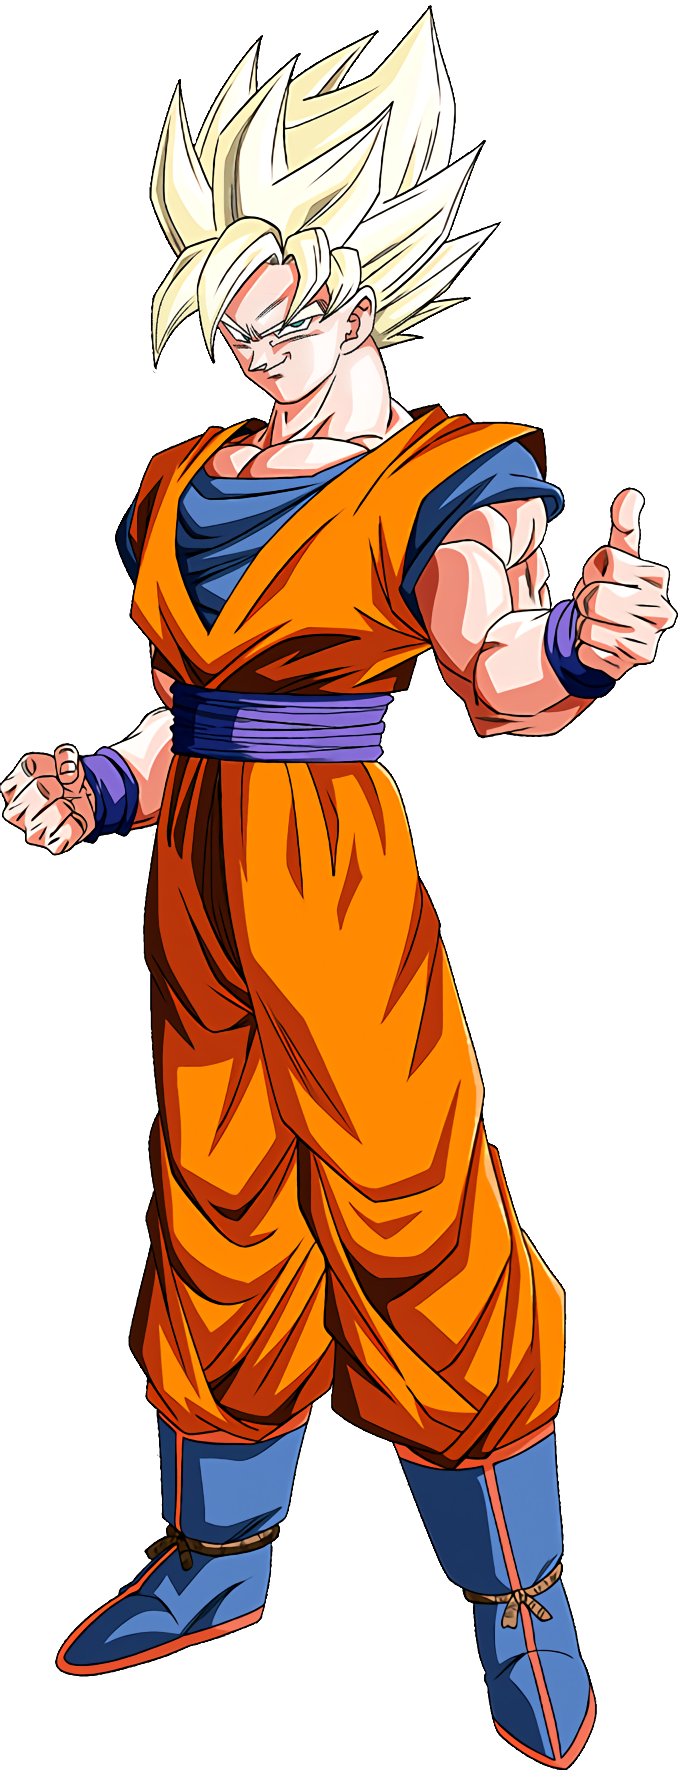 Super Saiyan Goku (Upscale) 2 by woodlandbuckle on DeviantArt